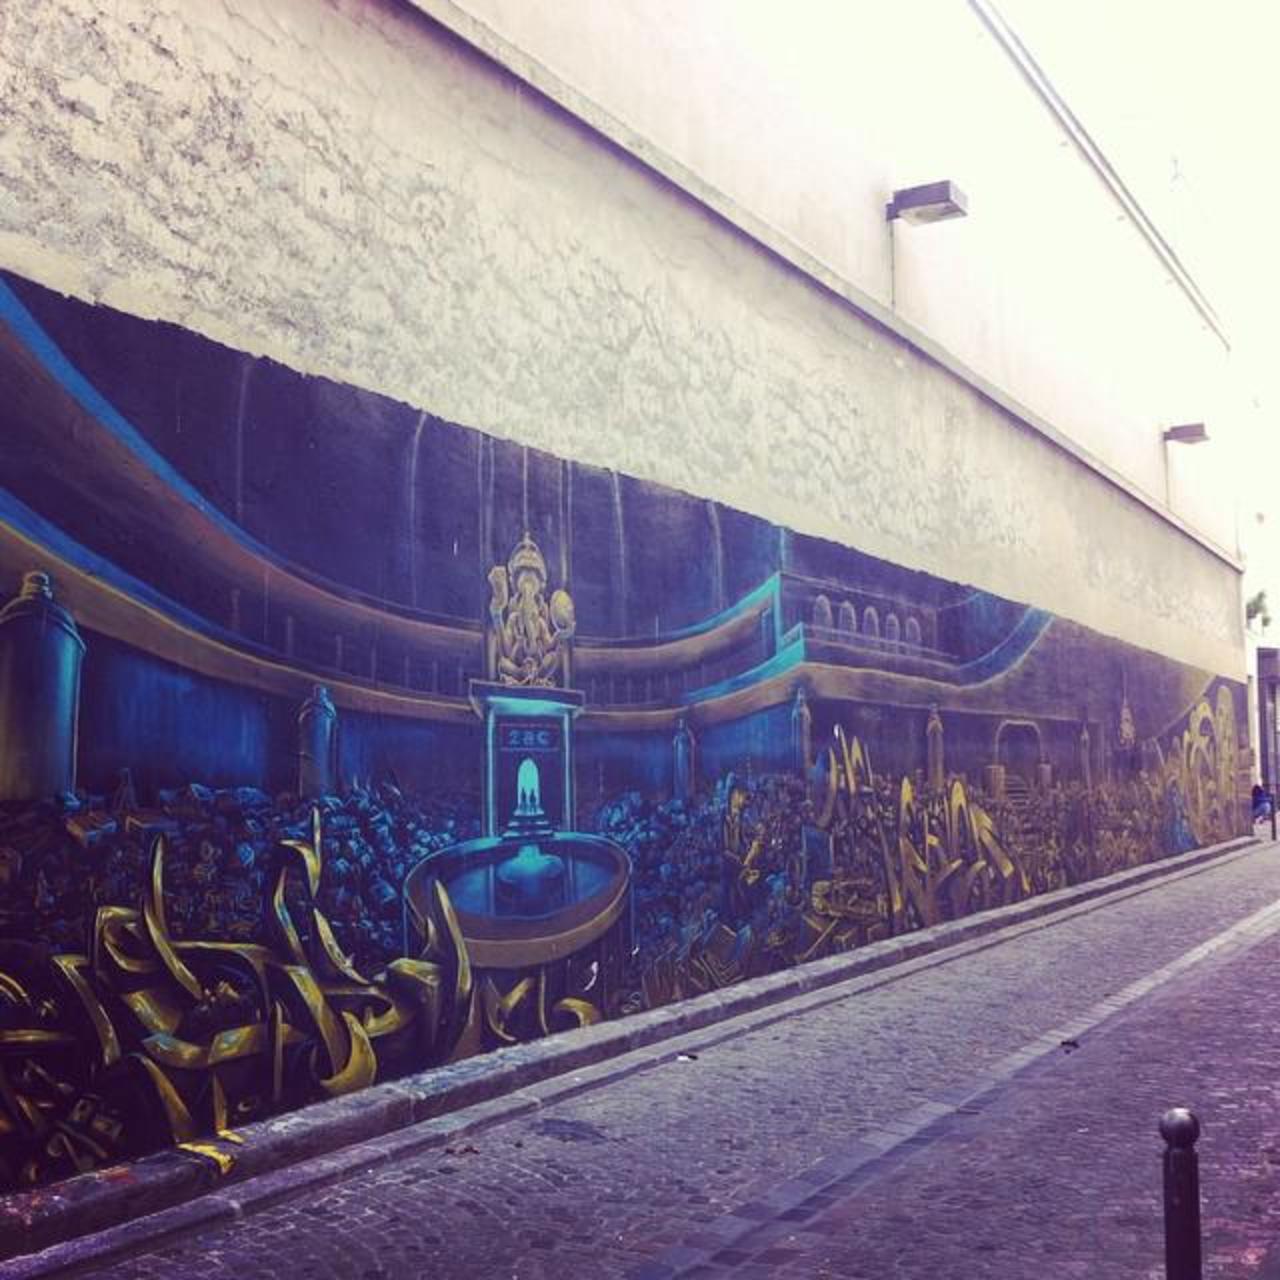 #Paris #graffiti photo by @valentine.frd http://ift.tt/1L61rUL #StreetArt http://t.co/70Vq3cIDGC